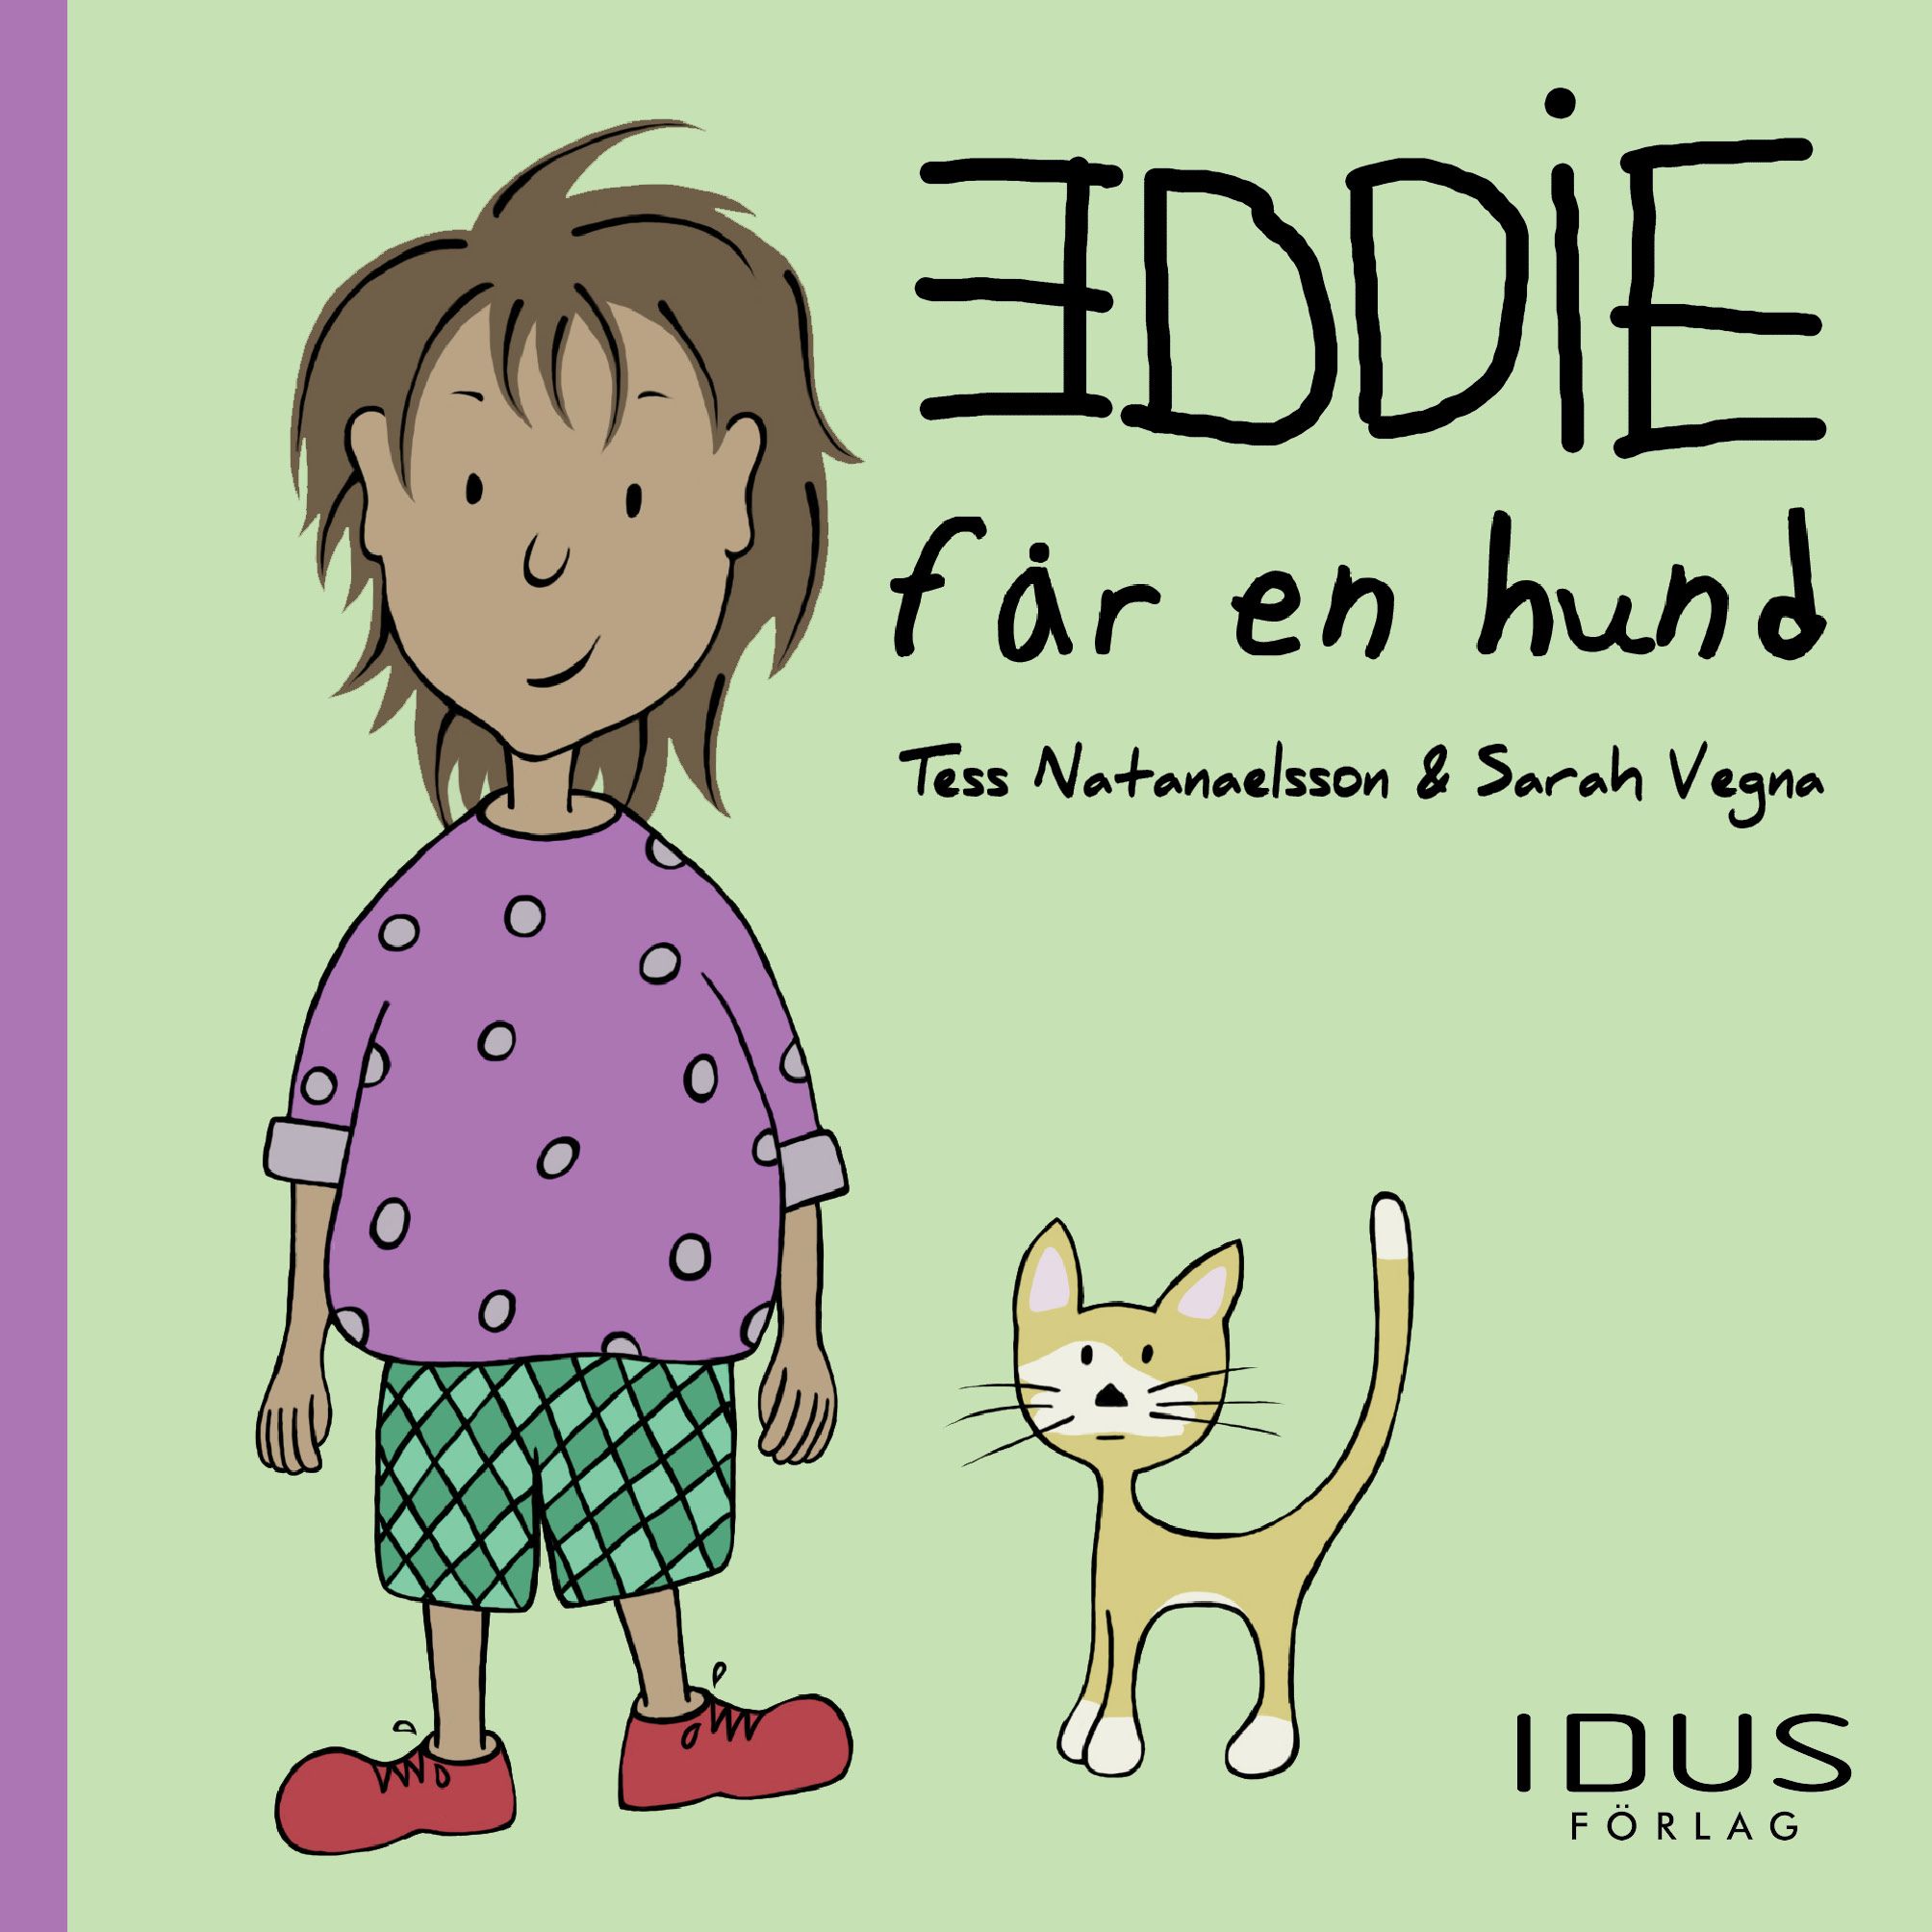 Eddie får en hund, eBook by Tess Natanaelsson, Sarah Vegna